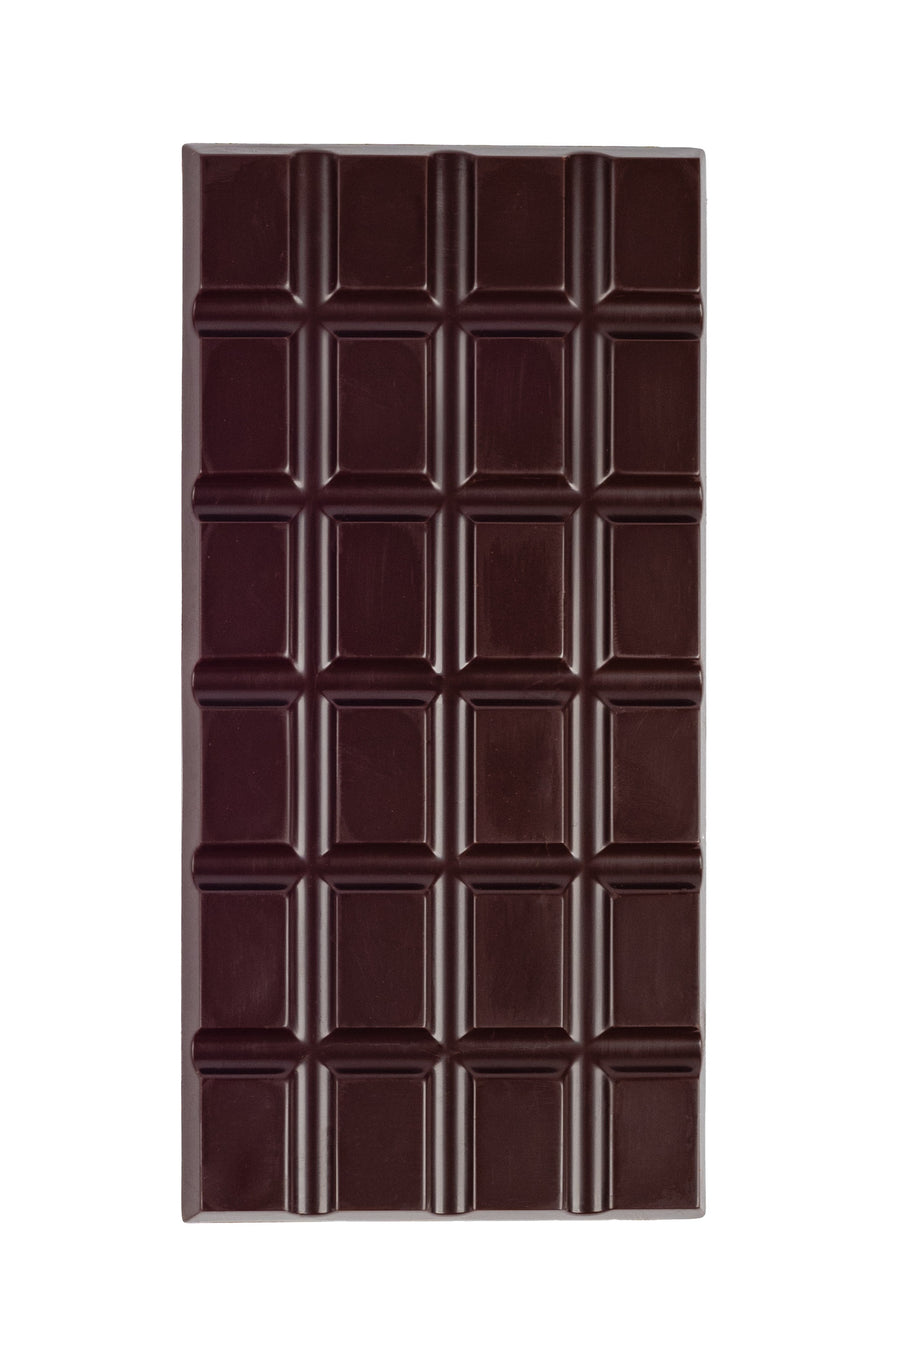 Tablette Origine Ouganda 80% - Chocolat noir